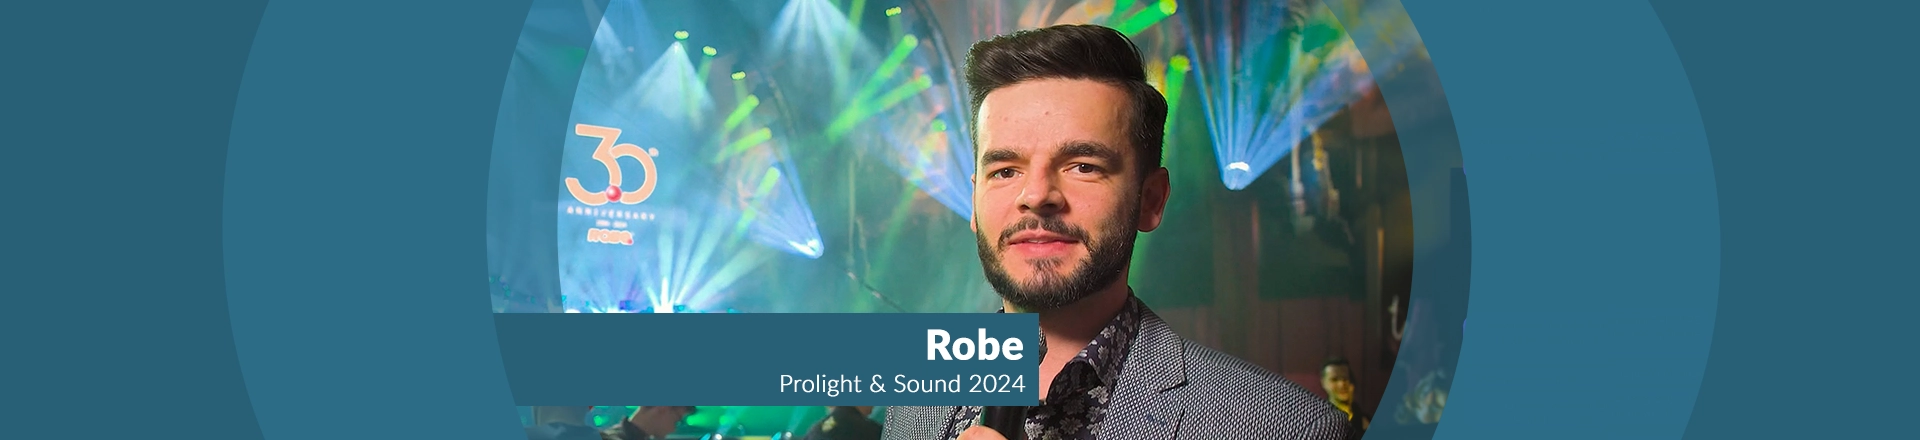 Spektakularne 30-te urodziny Robe na Prolight and Sound 2024